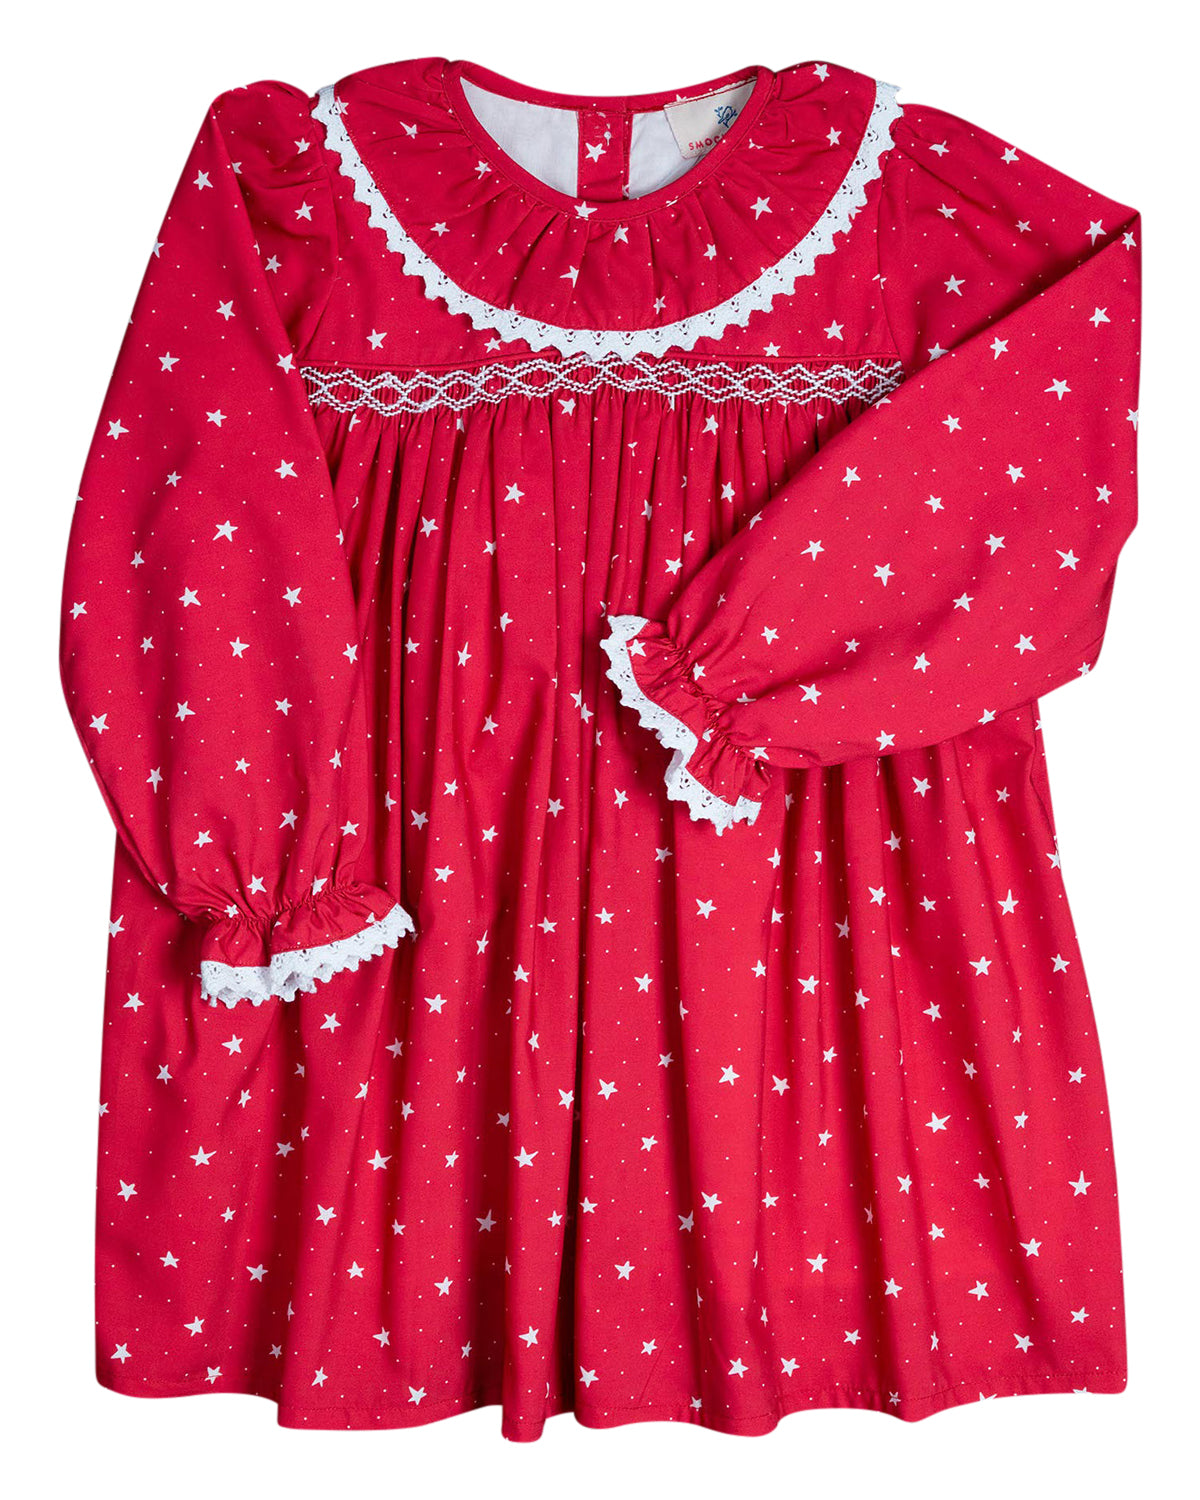 Red Star Print Smocked Dress- FINAL SALE